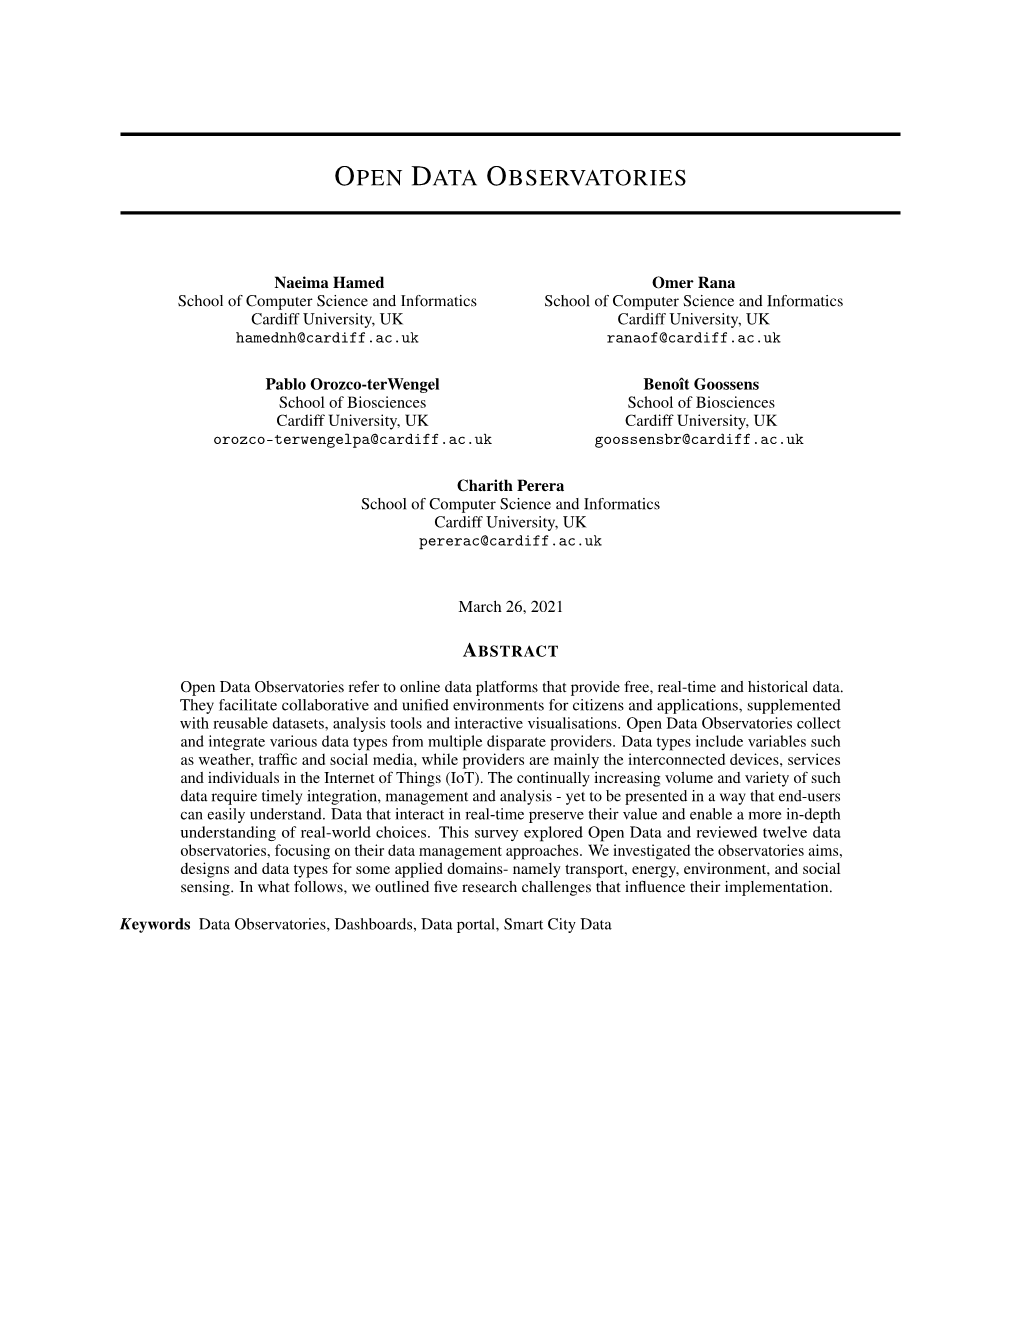 Open Data Observatories